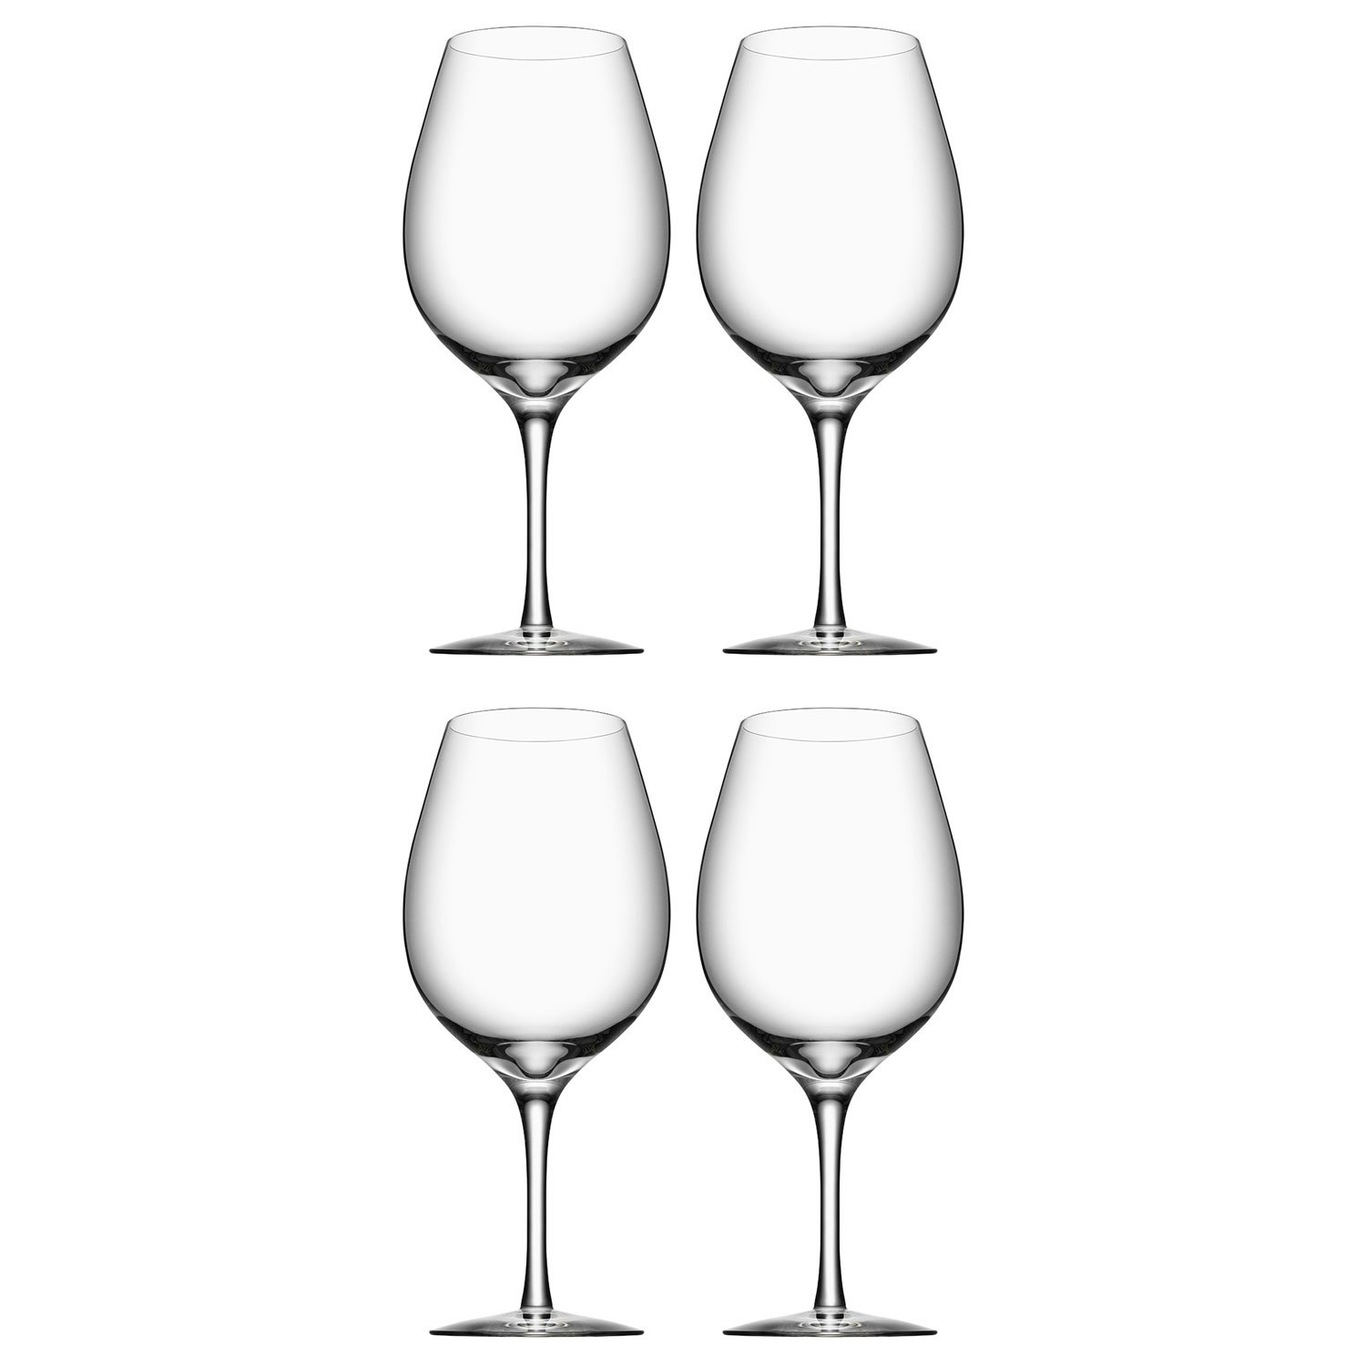 https://royaldesign.com/image/2/orrefors-more-wine-glass-xl-61-cl-4-pcs-0?w=800&quality=80